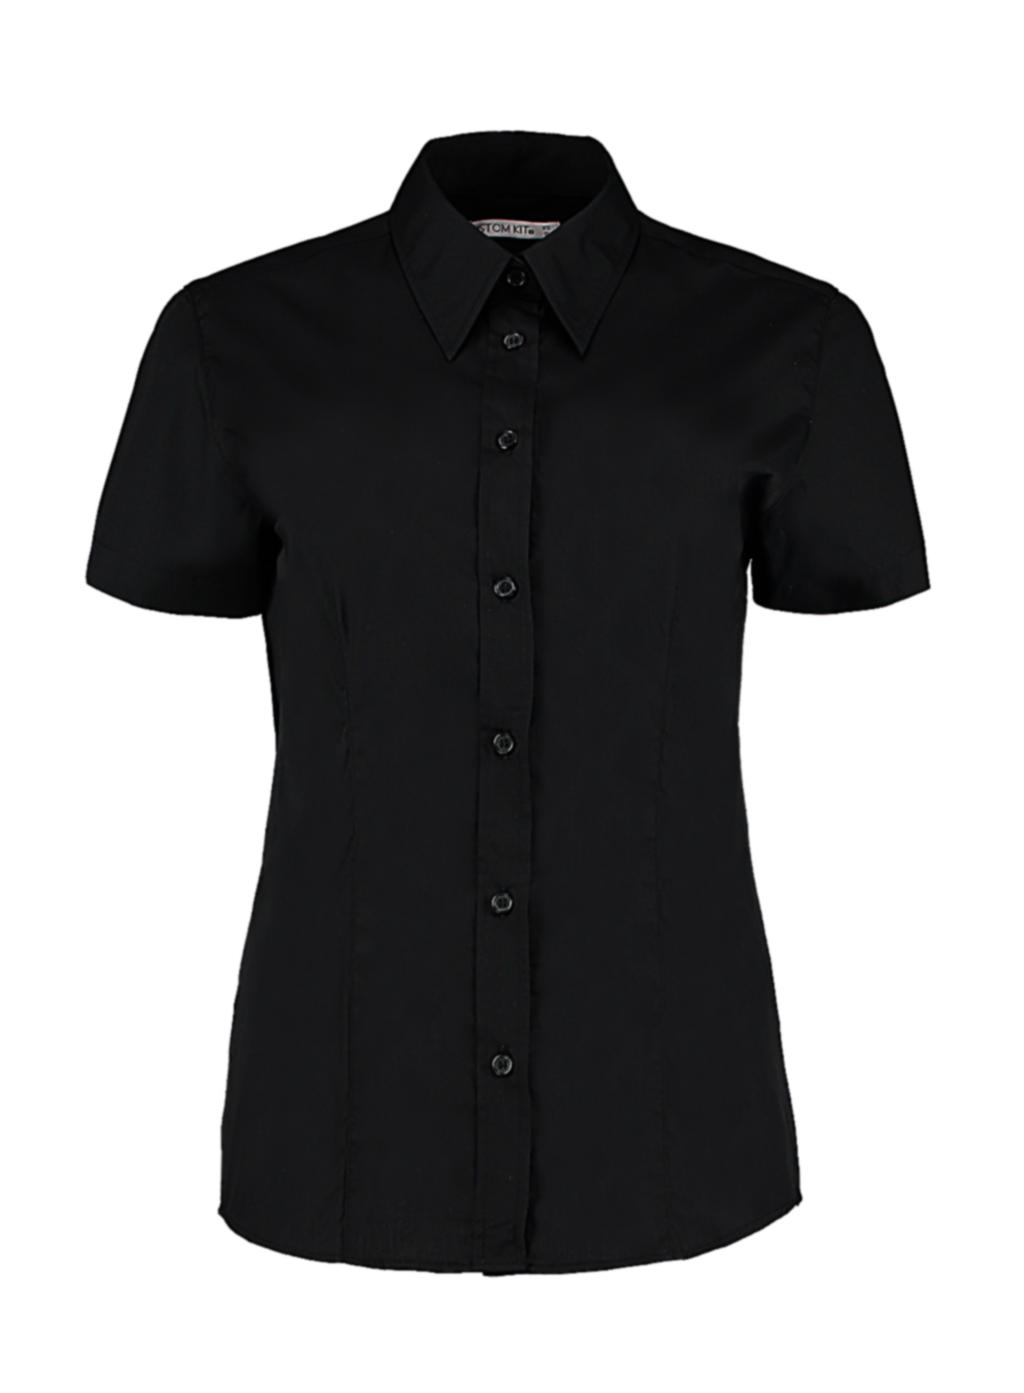 728.11 / Women`s Classic Fit Workforce Shirt / Black